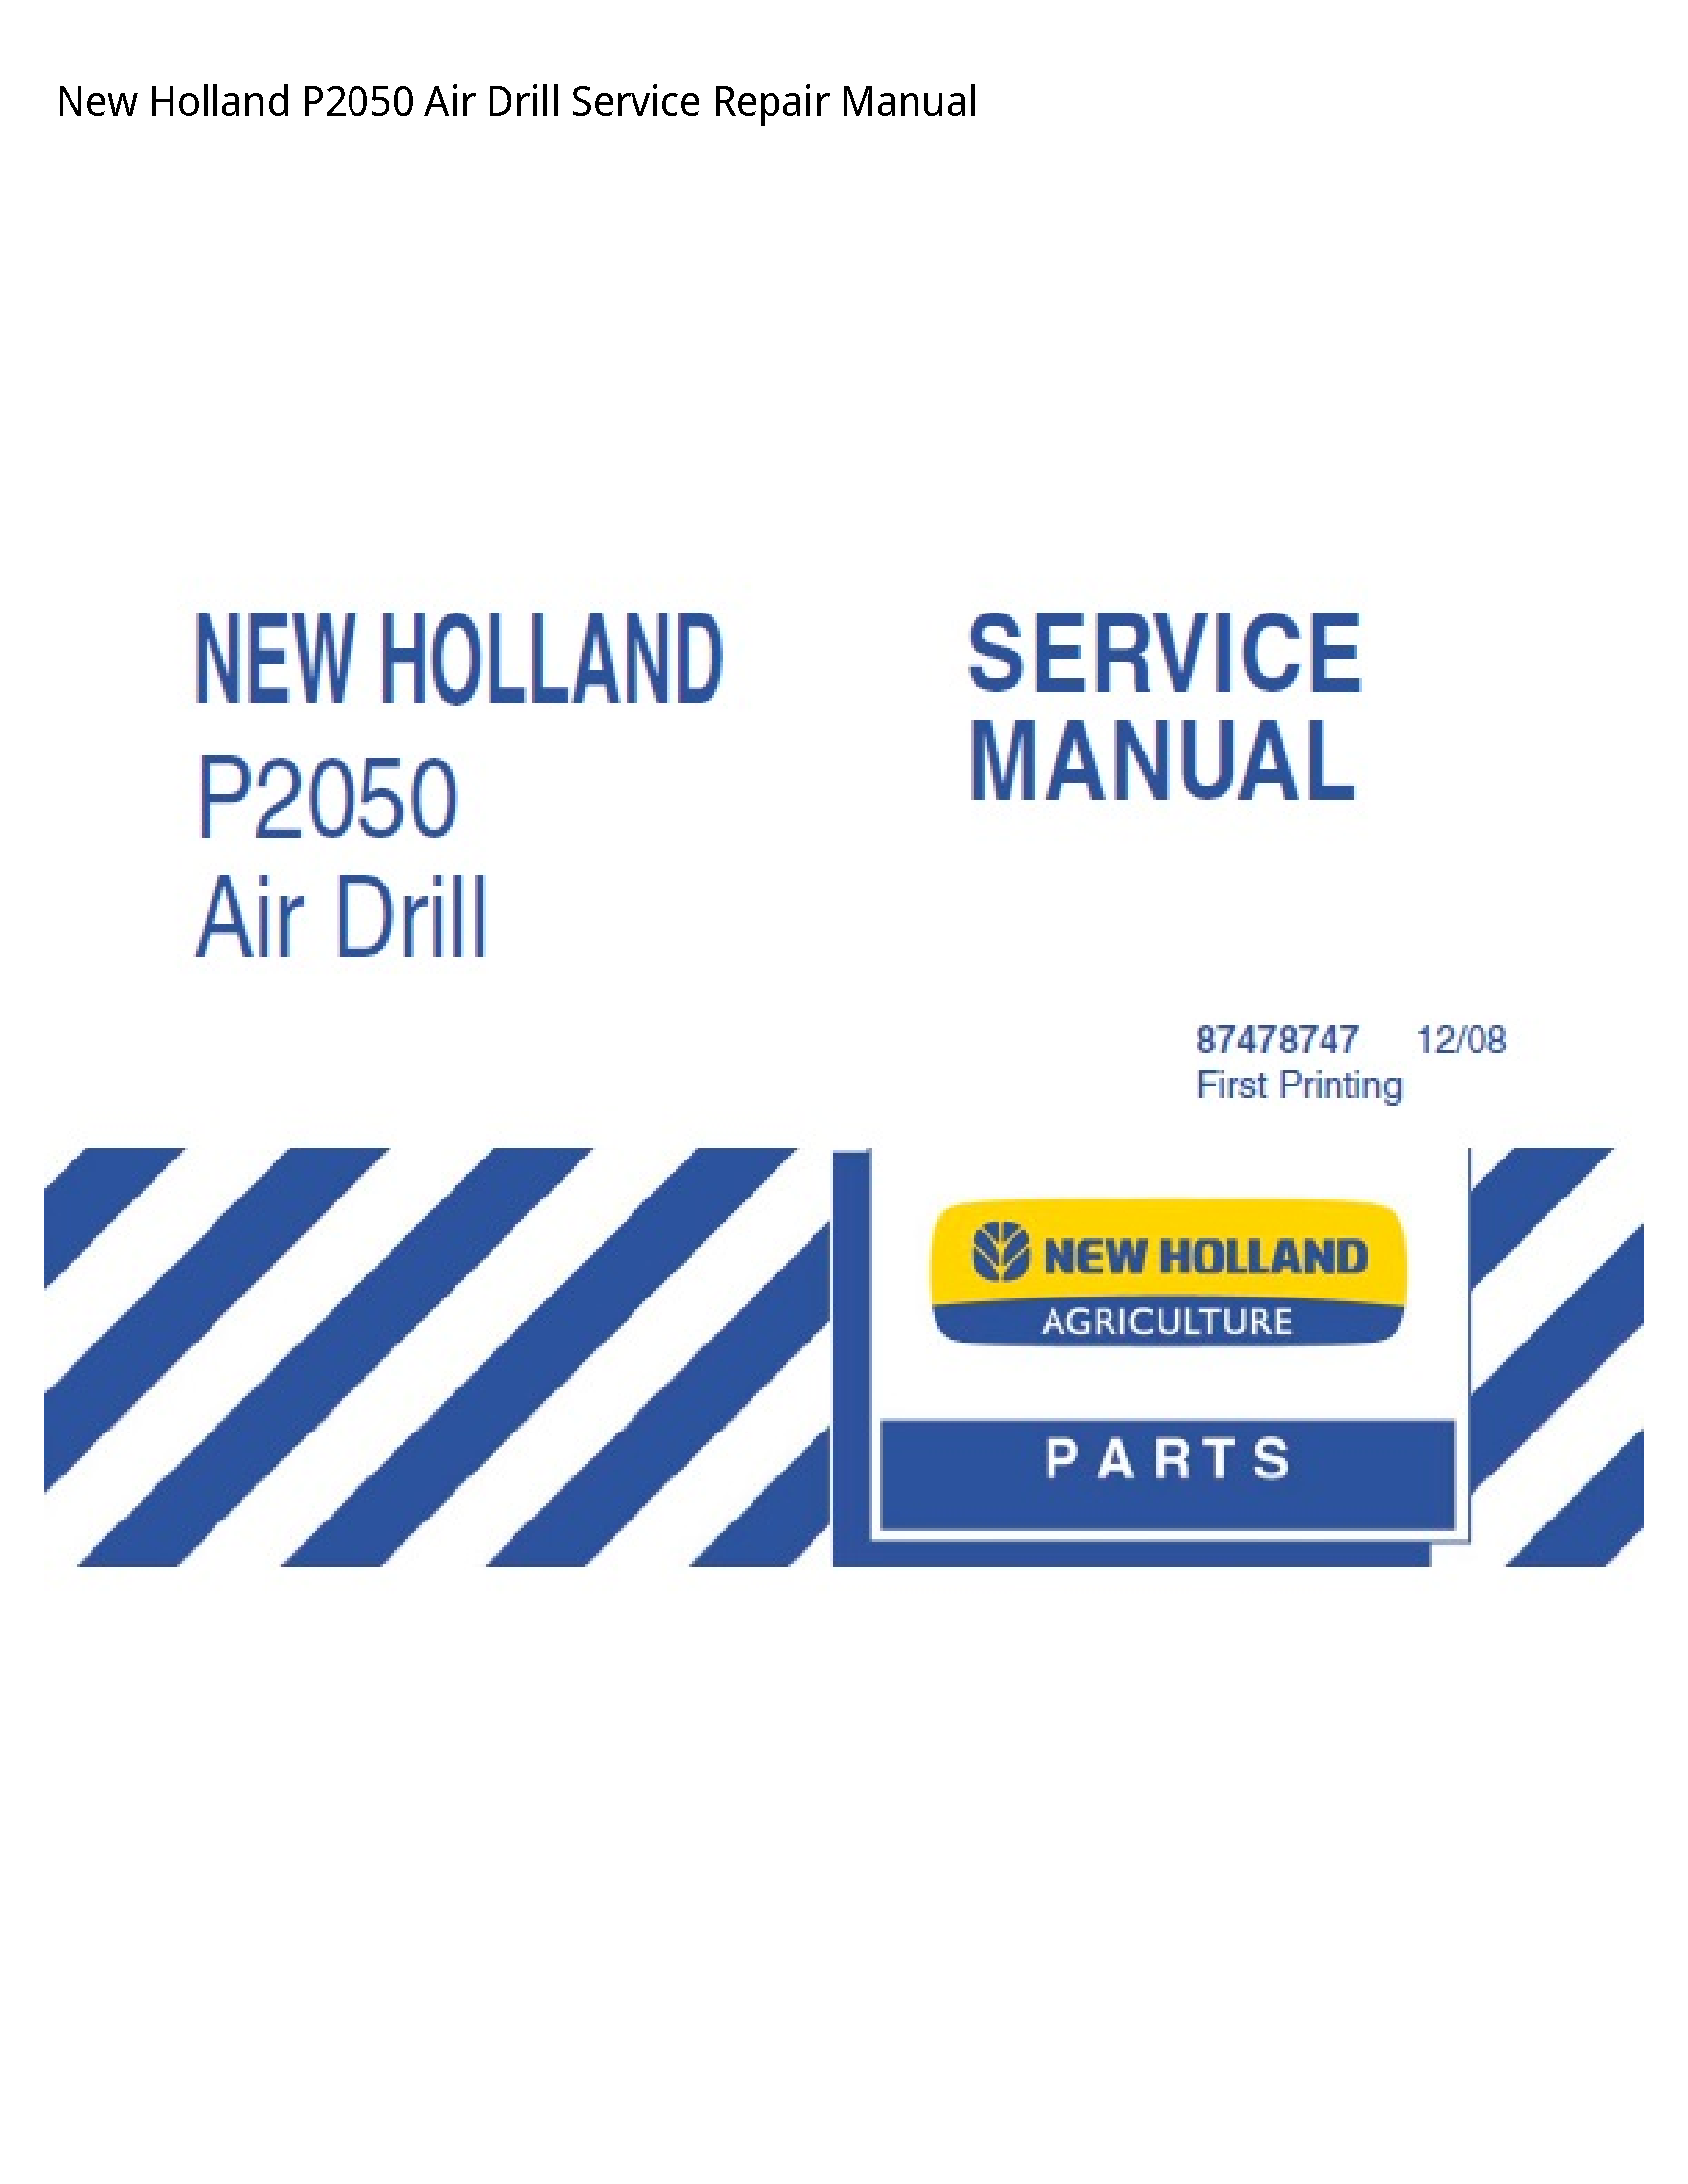 New Holland P2050 Air Drill manual